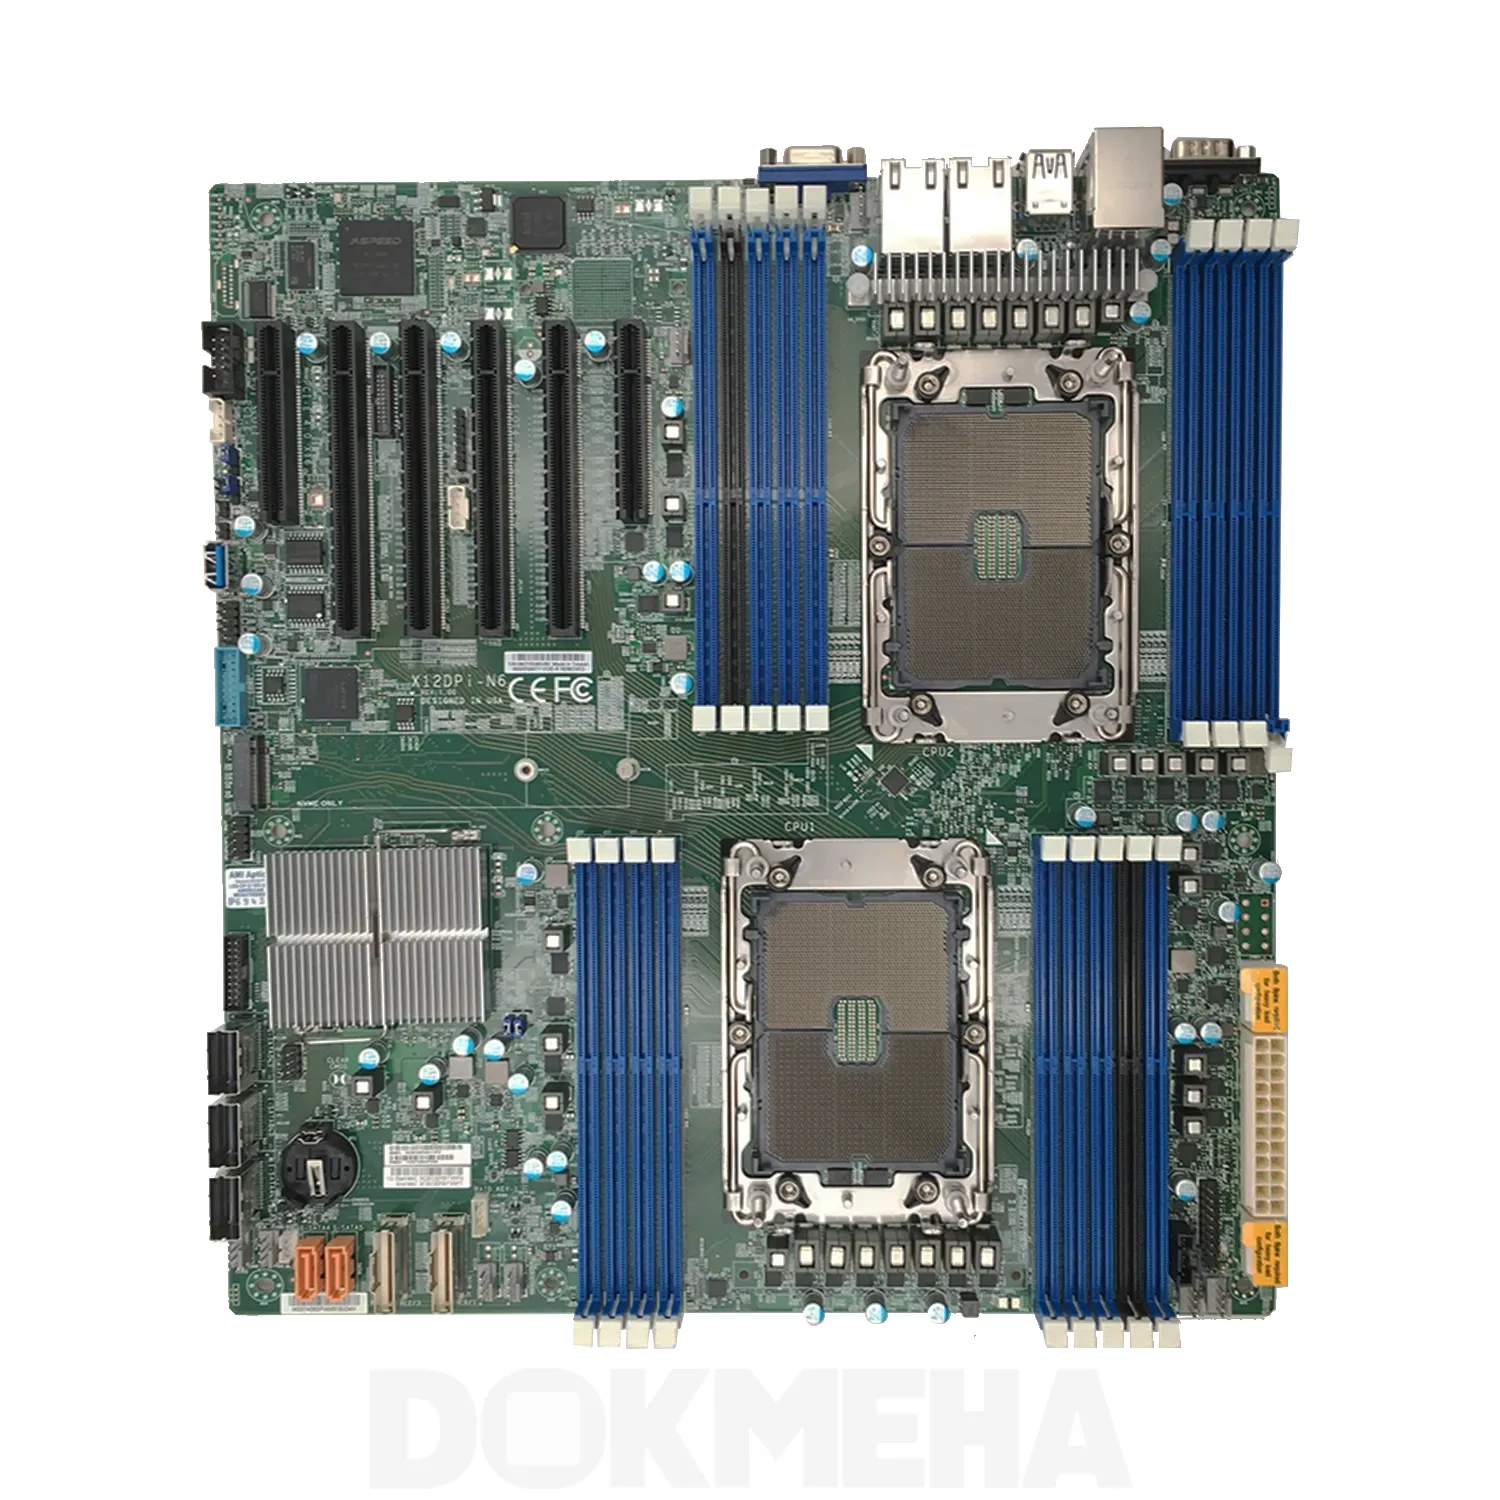 مادربرد SuperMicro X12DPi-N6 در کیس ورک استیشن DOKMEHA W20000 Intel Xeon - 3TH GEN